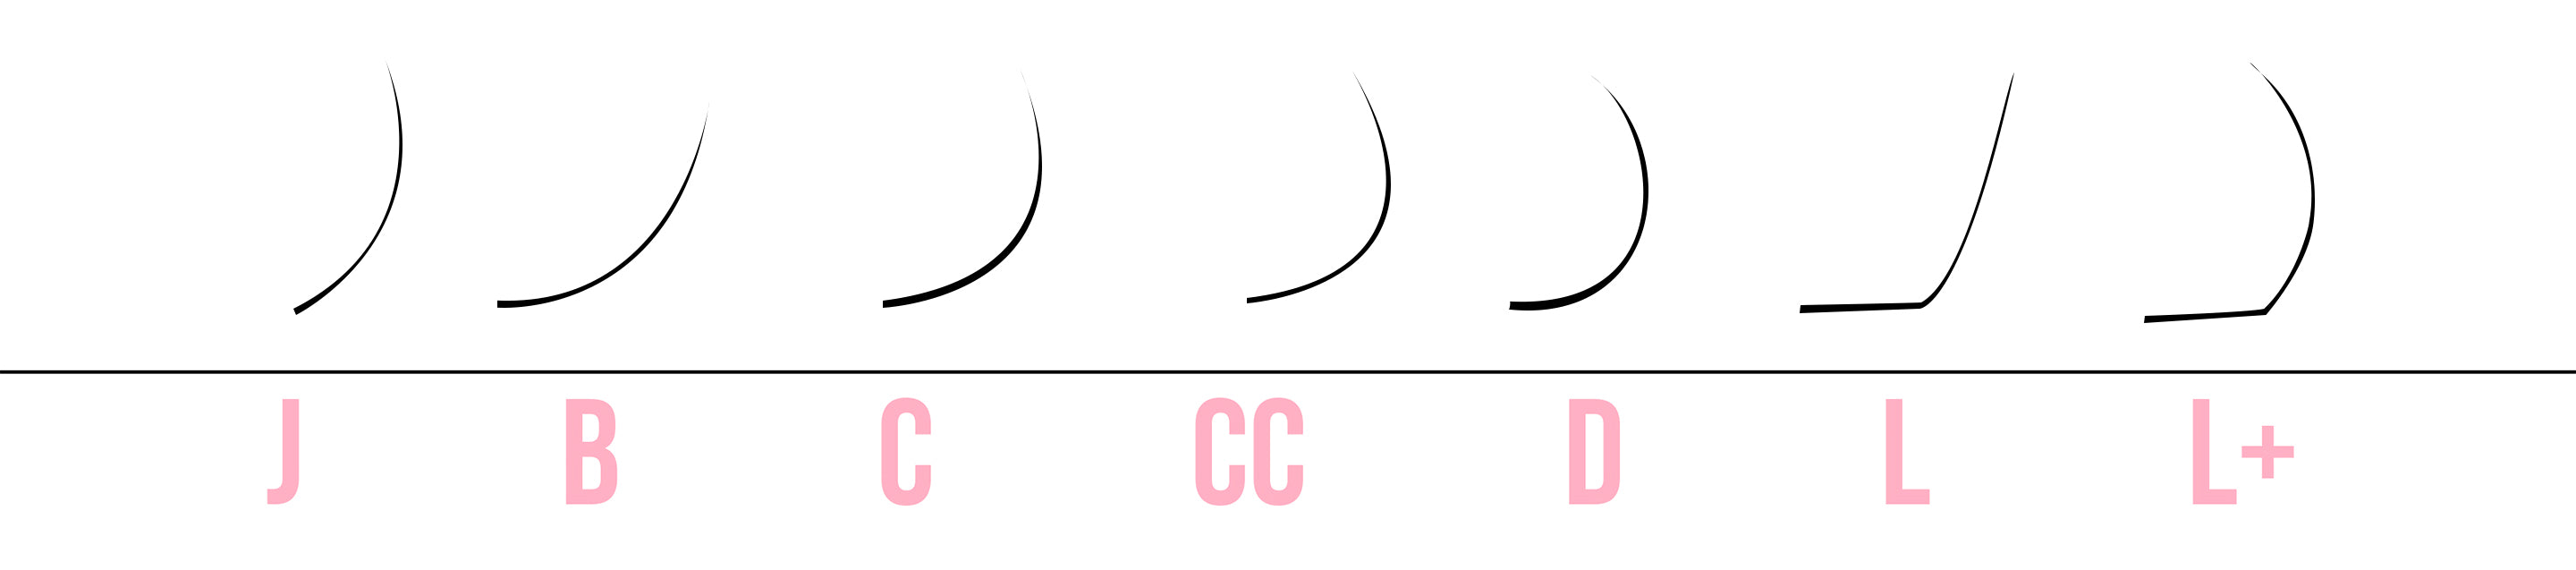 types of lash curls comparison